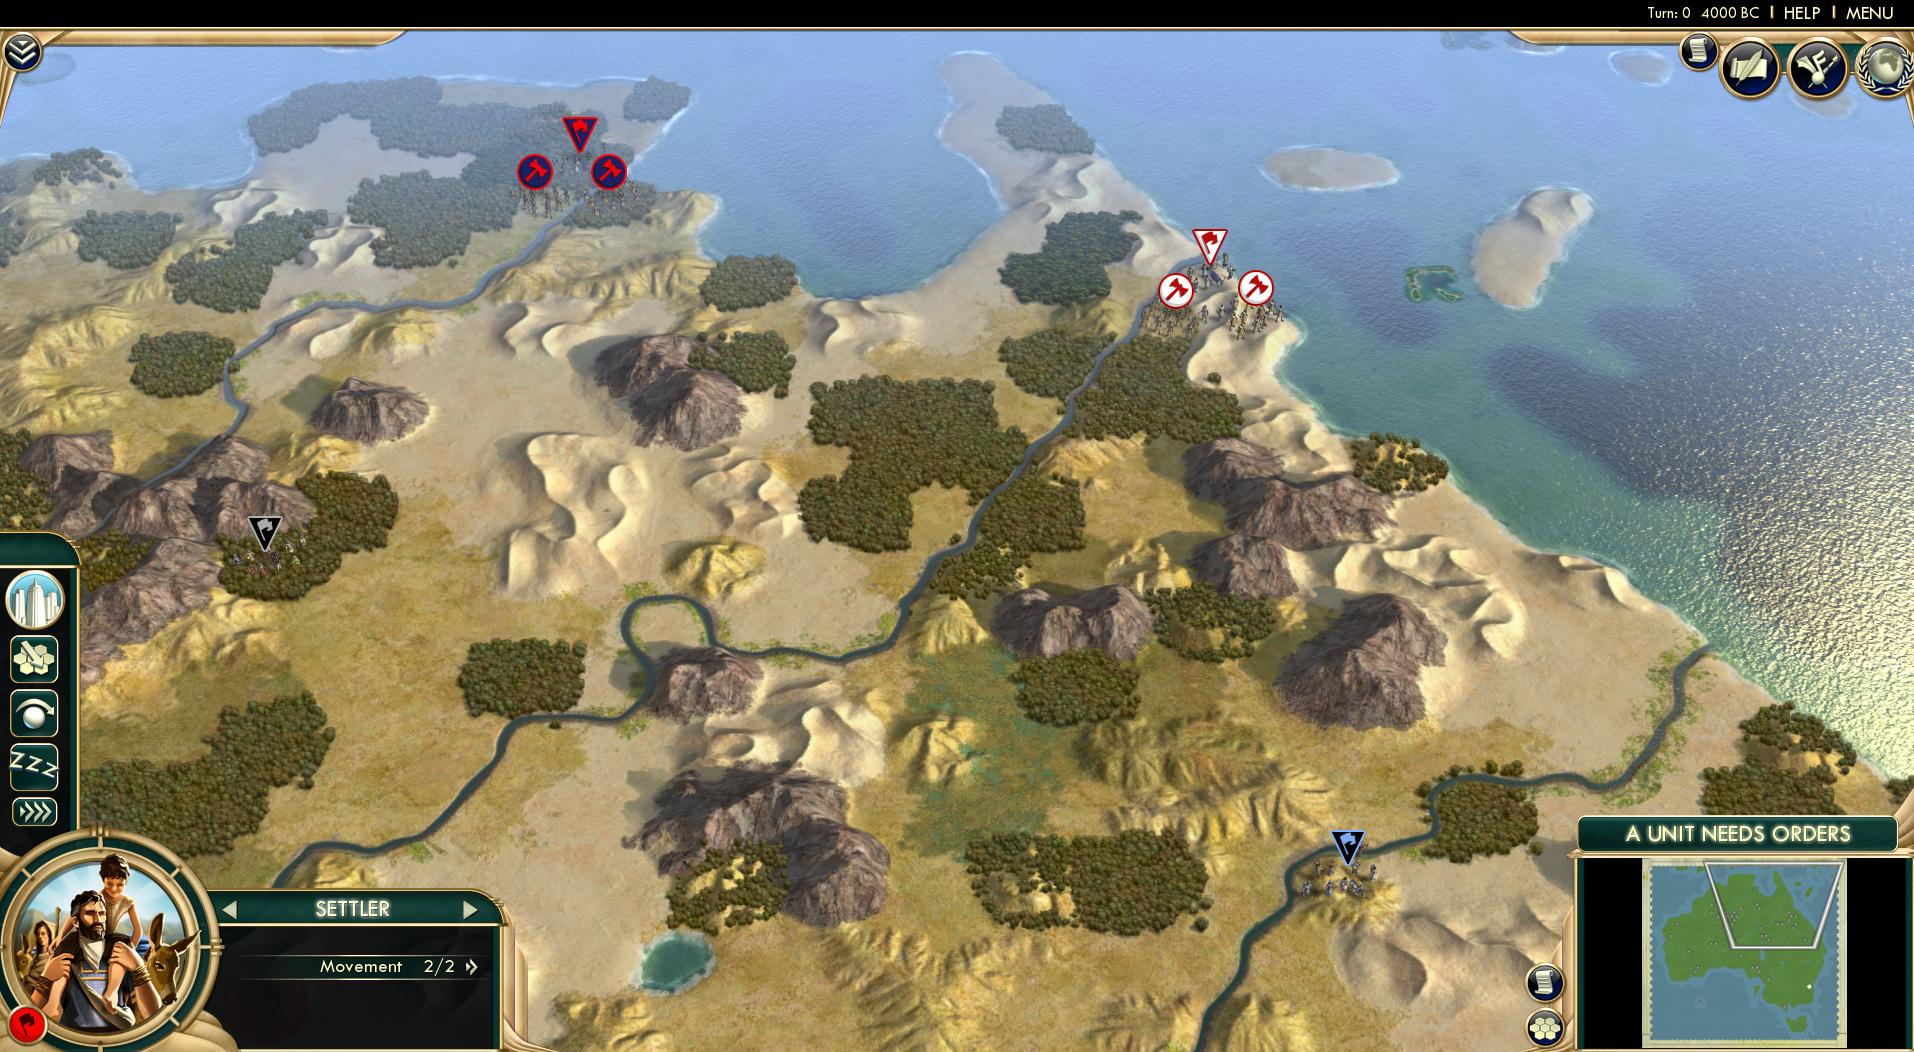 Civilization V - Scrambled Nations Map Pack